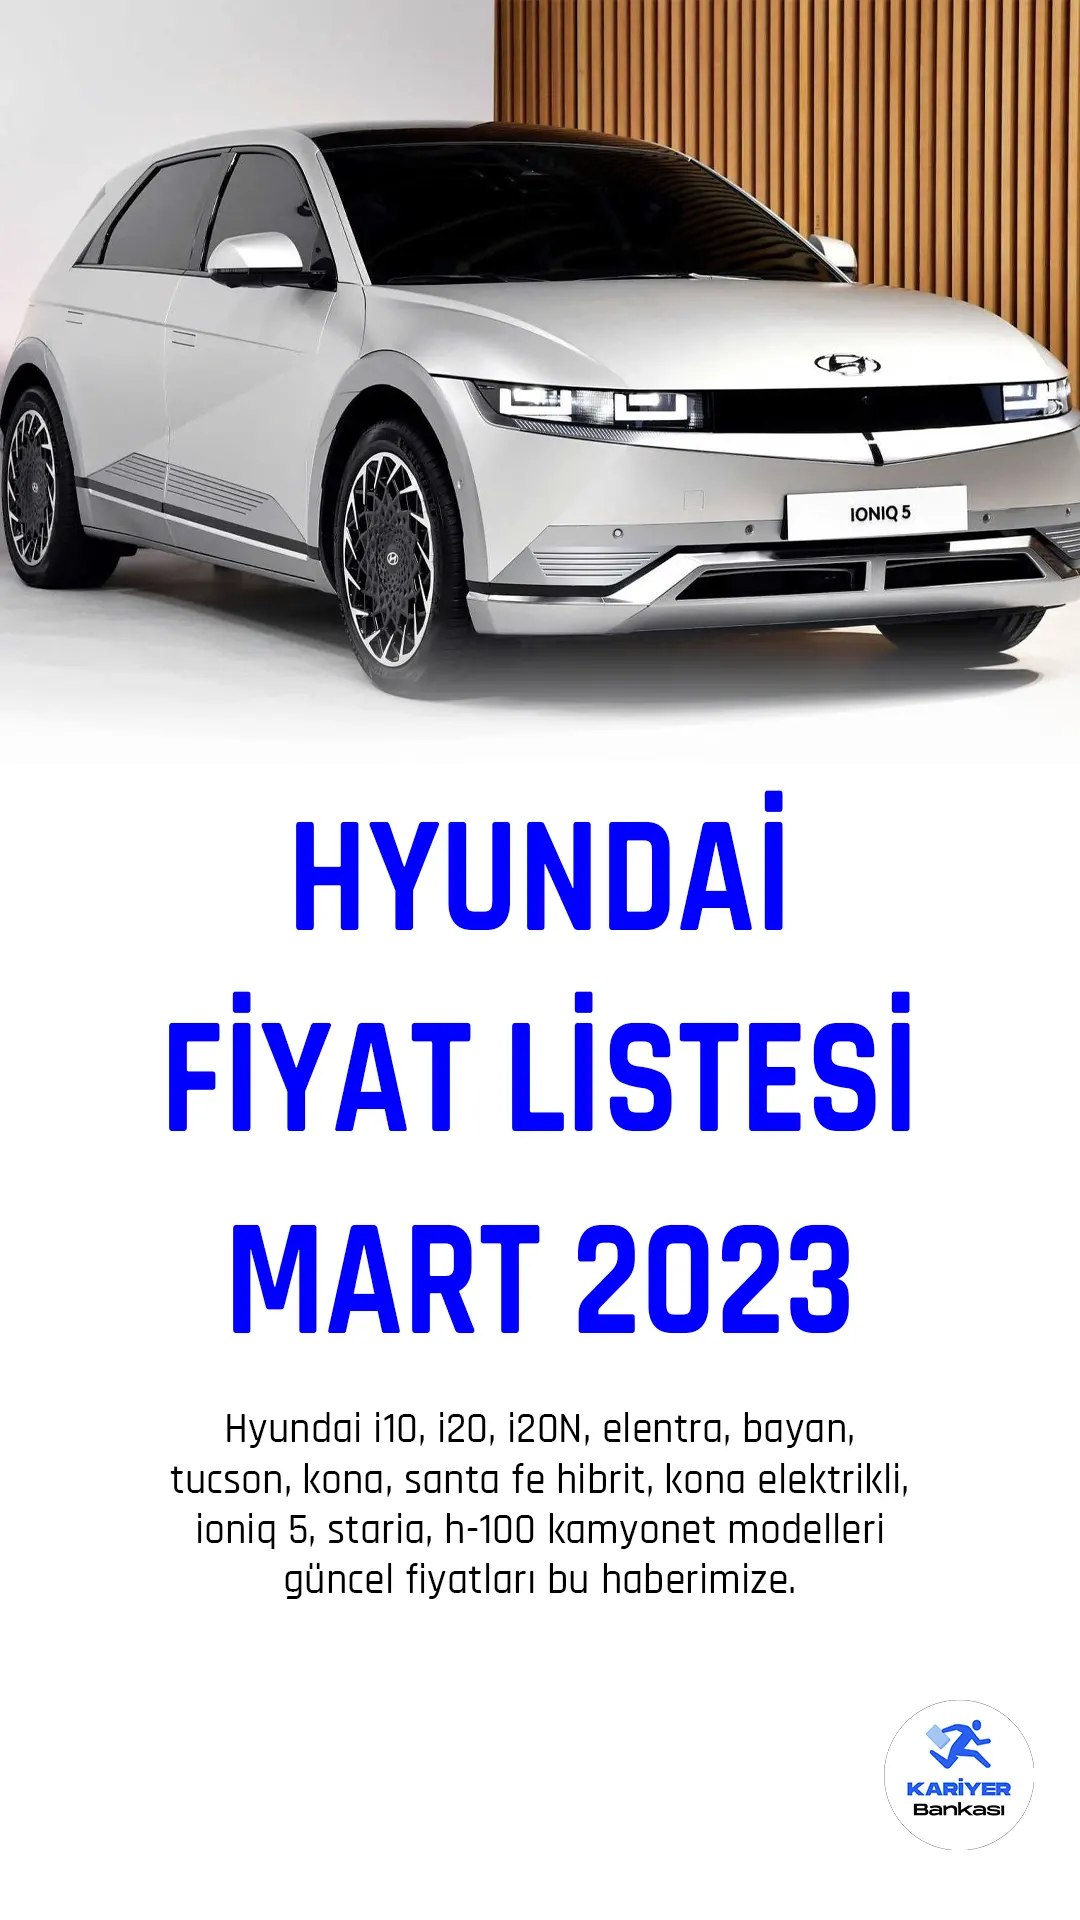 Hyundai fiyat listesi yayımlandı. Hyundai i10, i20, i20N, elentra, bayan, tucson, kona, santa fe hibrit, kona elektrikli, ioniq 5, staria, h-100 kamyonet modelleri güncel fiyatları bu haberimize.